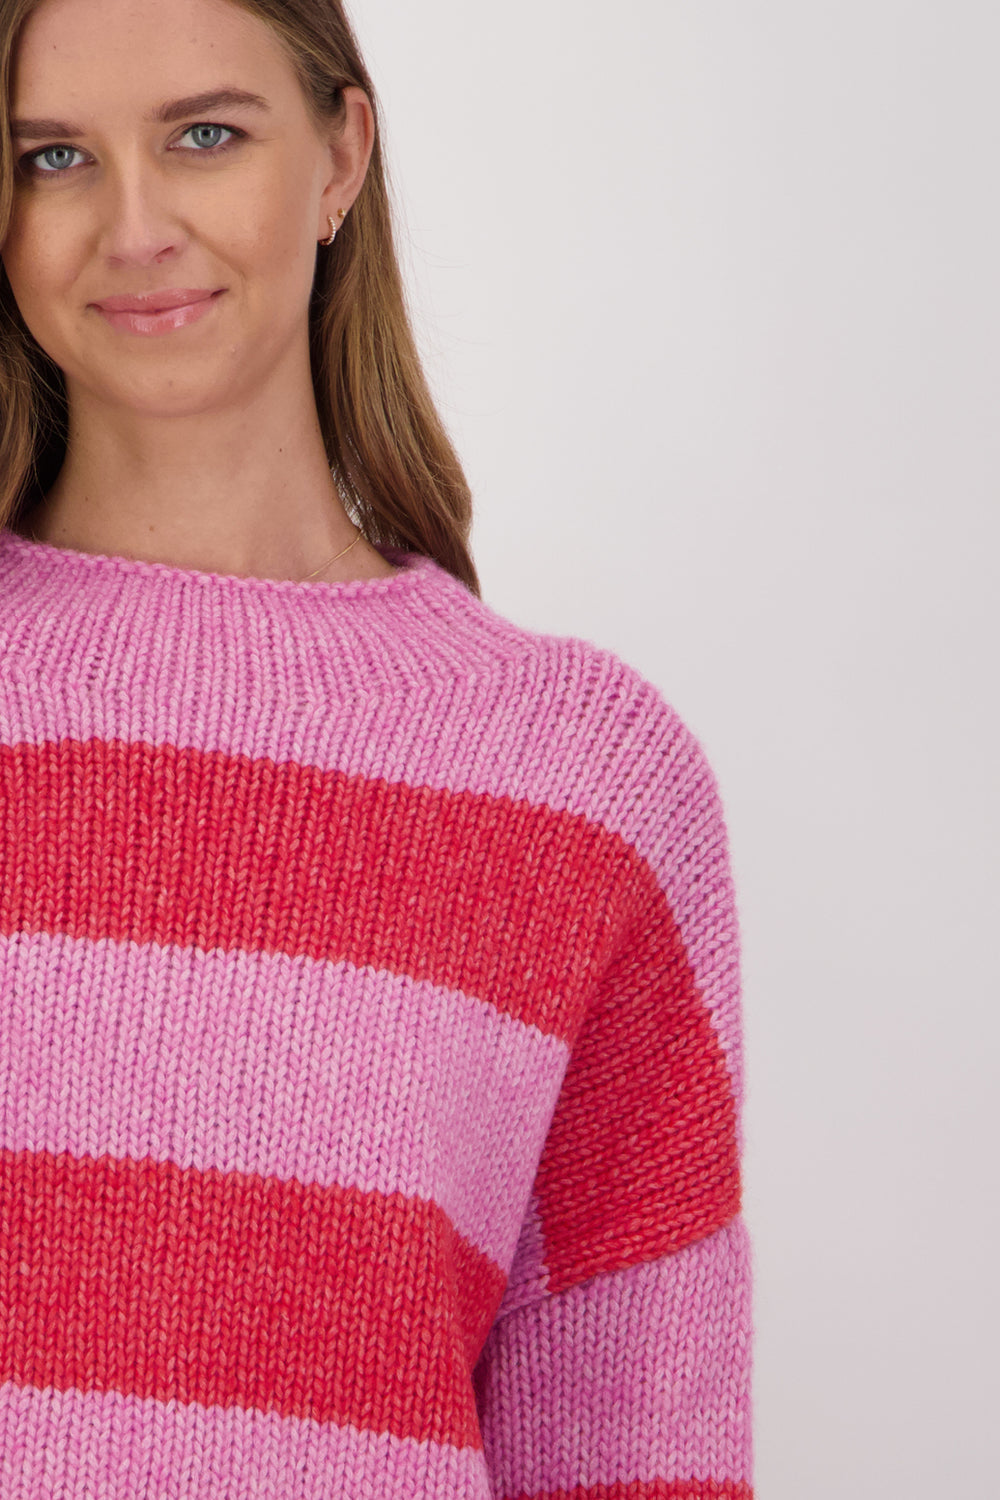 Briarwood Diaz Pink/Red Stripe Sweater